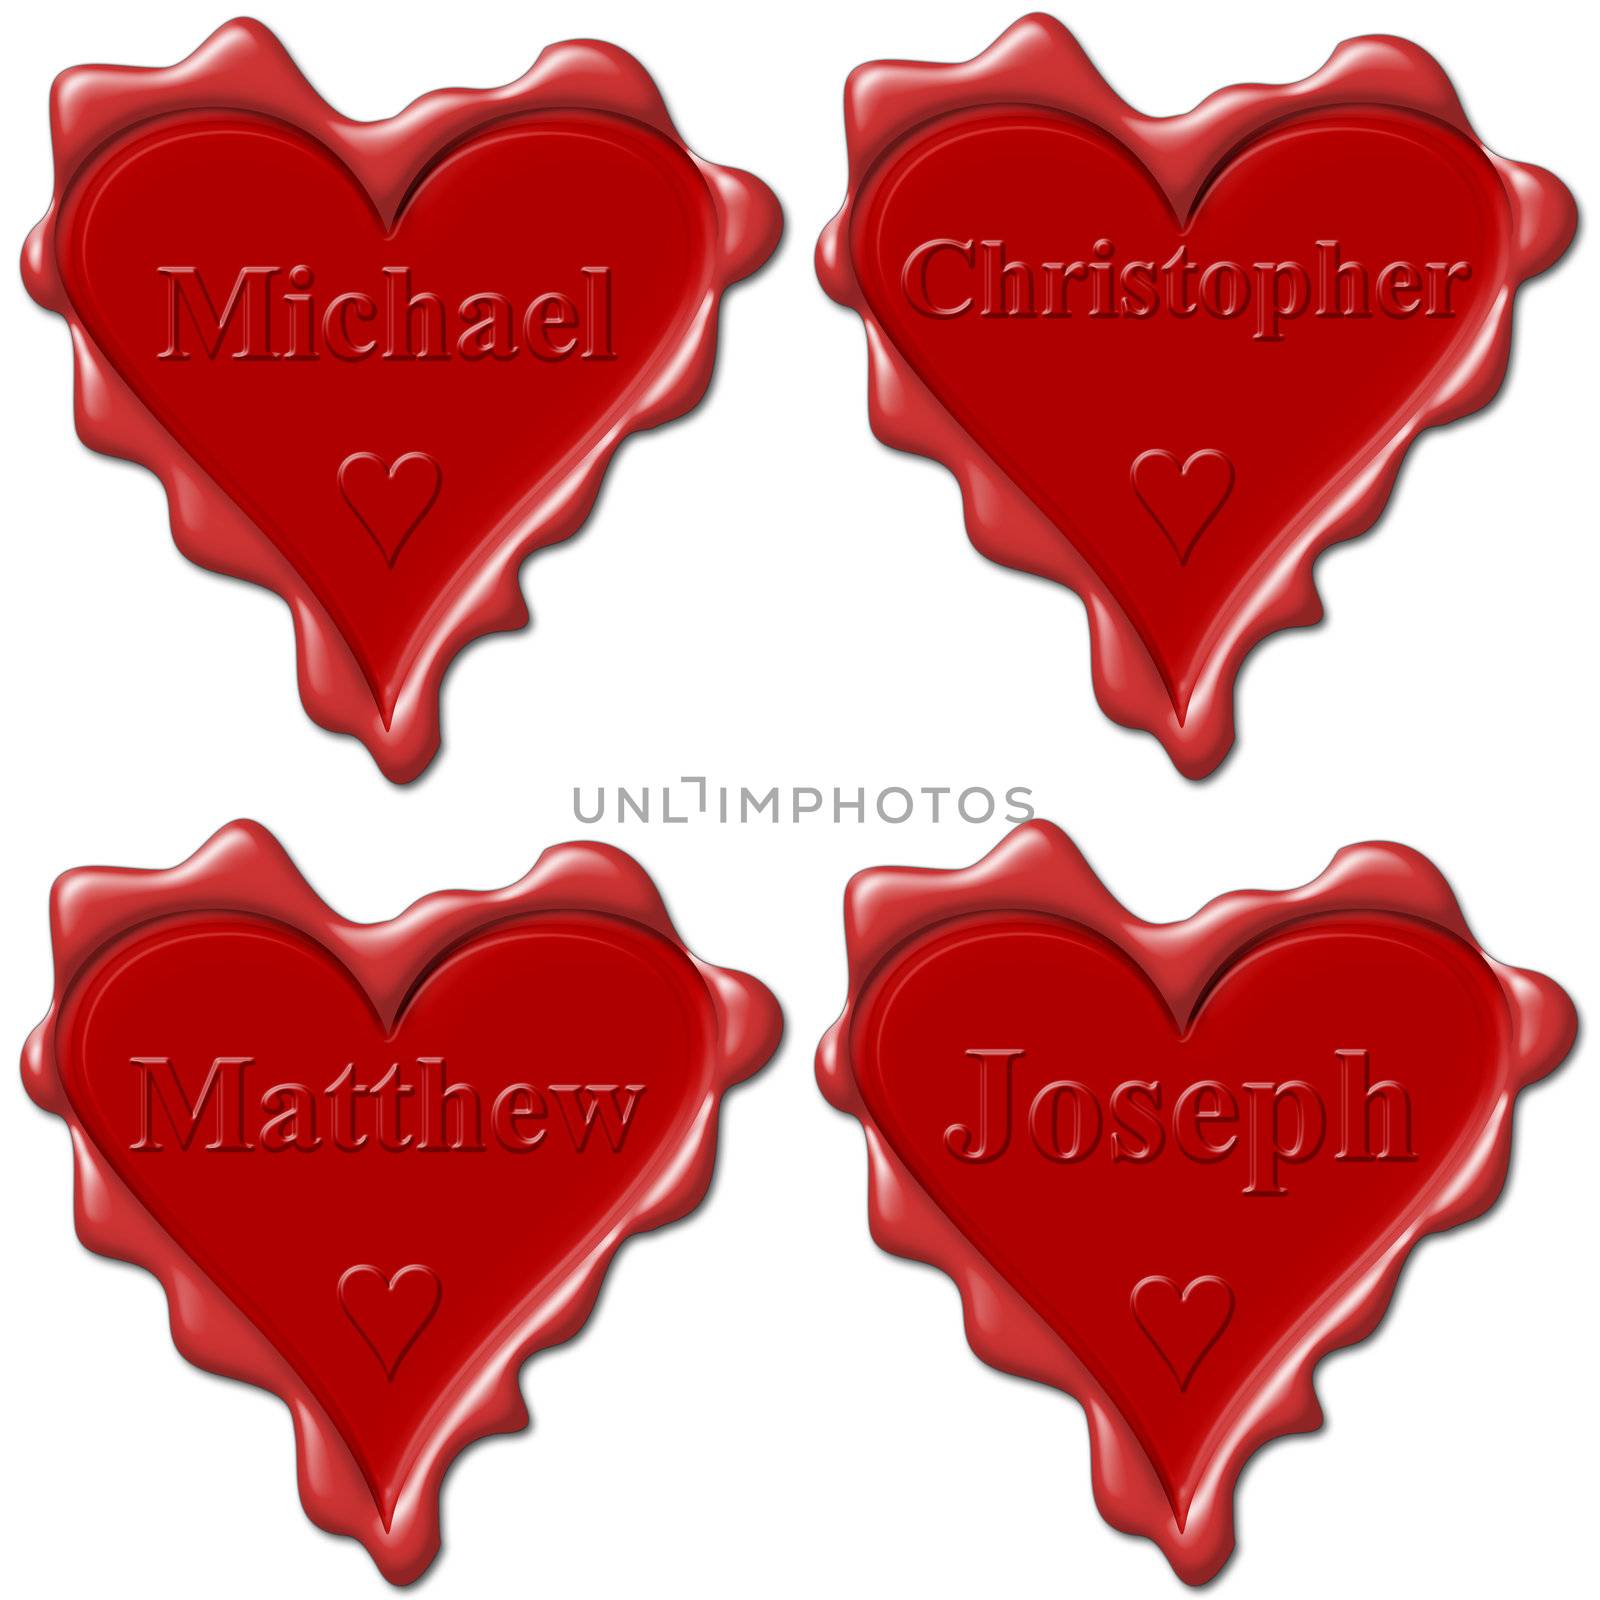 Valentine love hearts with names: Michael, Christopher, Matthew, Joseph